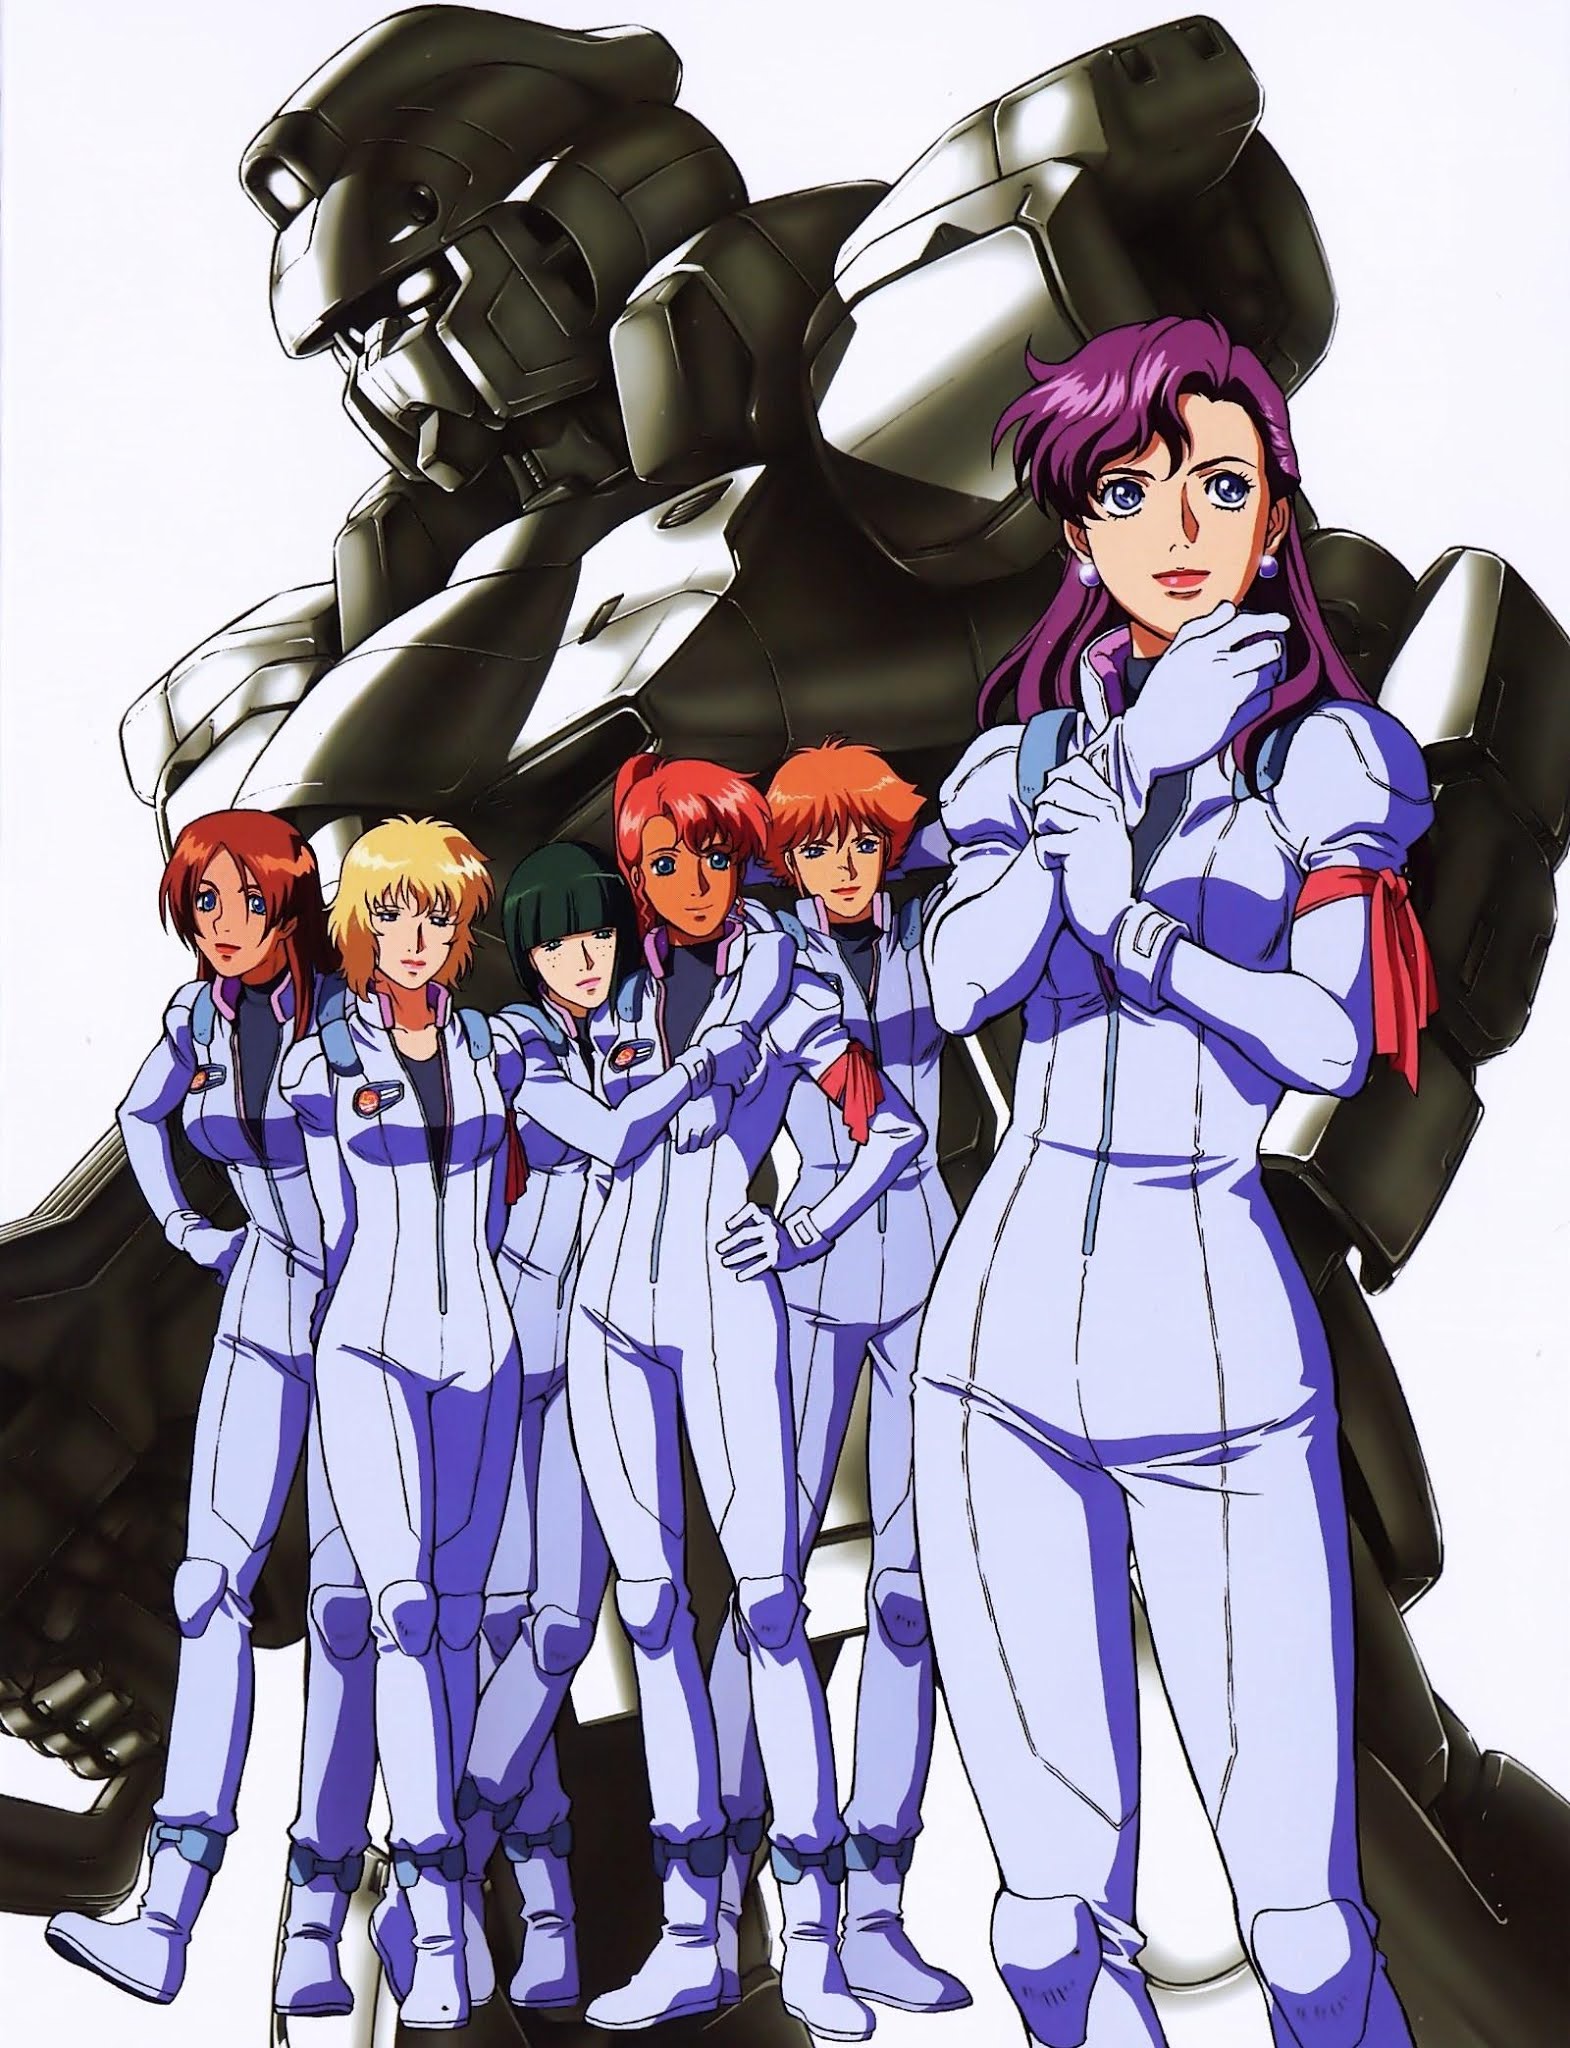 The Gundam Anime Corner: Mobile Suit Victory Gundam Part 3 Episodes 11-15